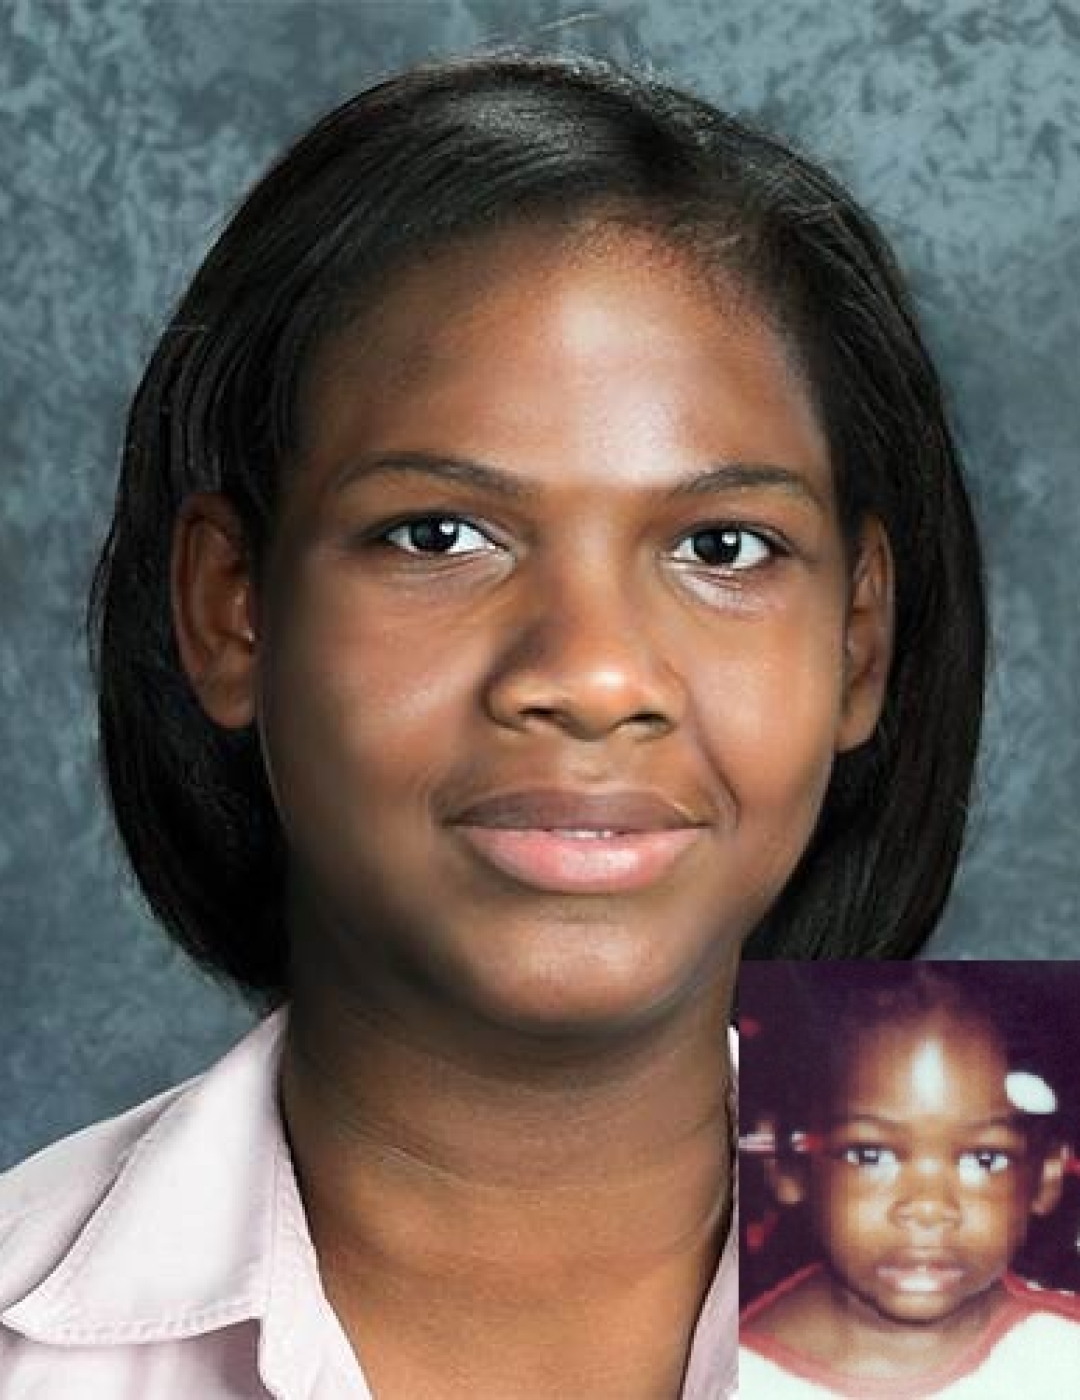 Tanisha Lorraine Watkins. Missing girl with black hair and brown eyes.